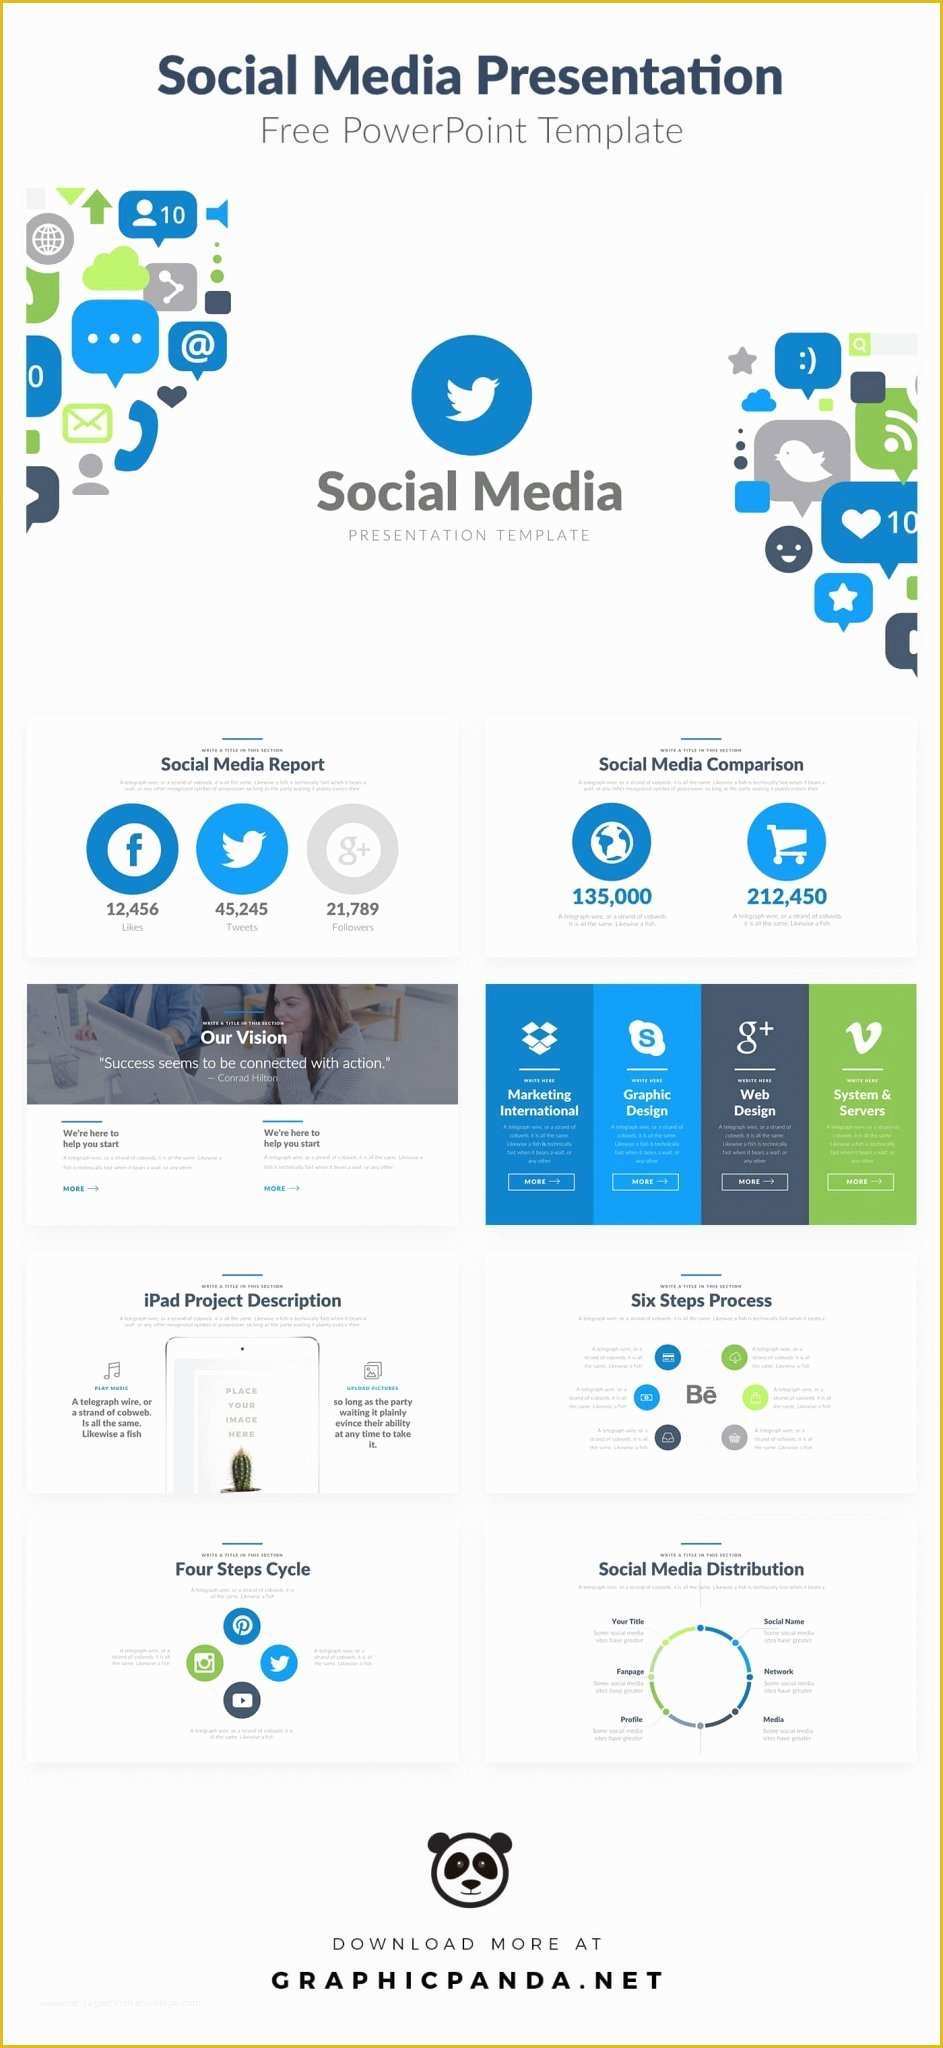 Social Media Design Templates Free Of 10 Free social Media Slides Templates for Microsoft Powerpoint